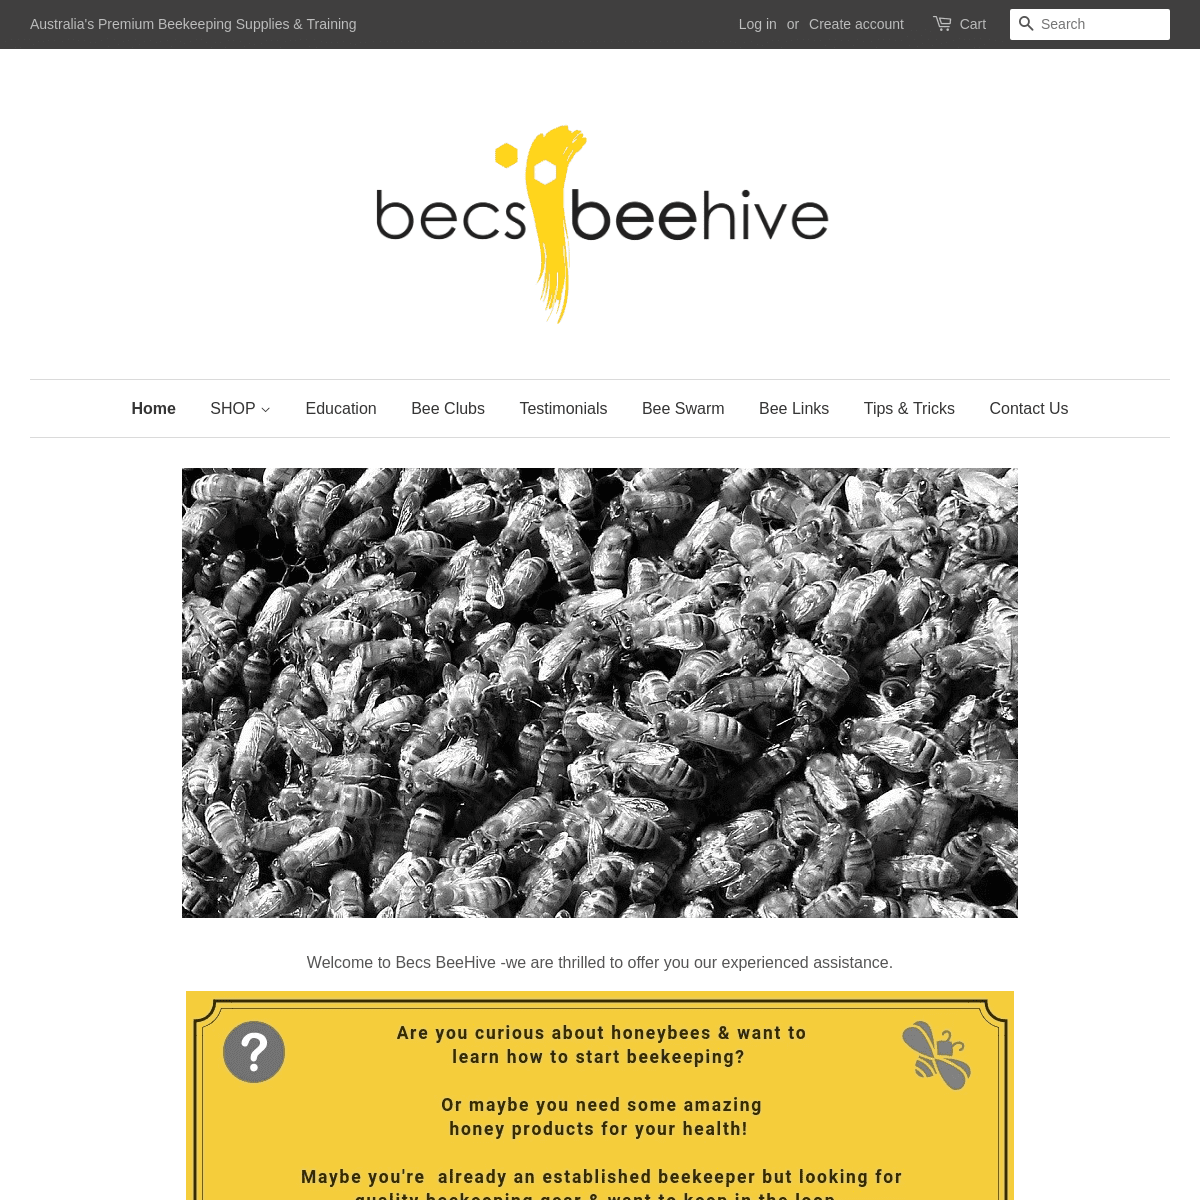 A complete backup of becsbeehive.com.au